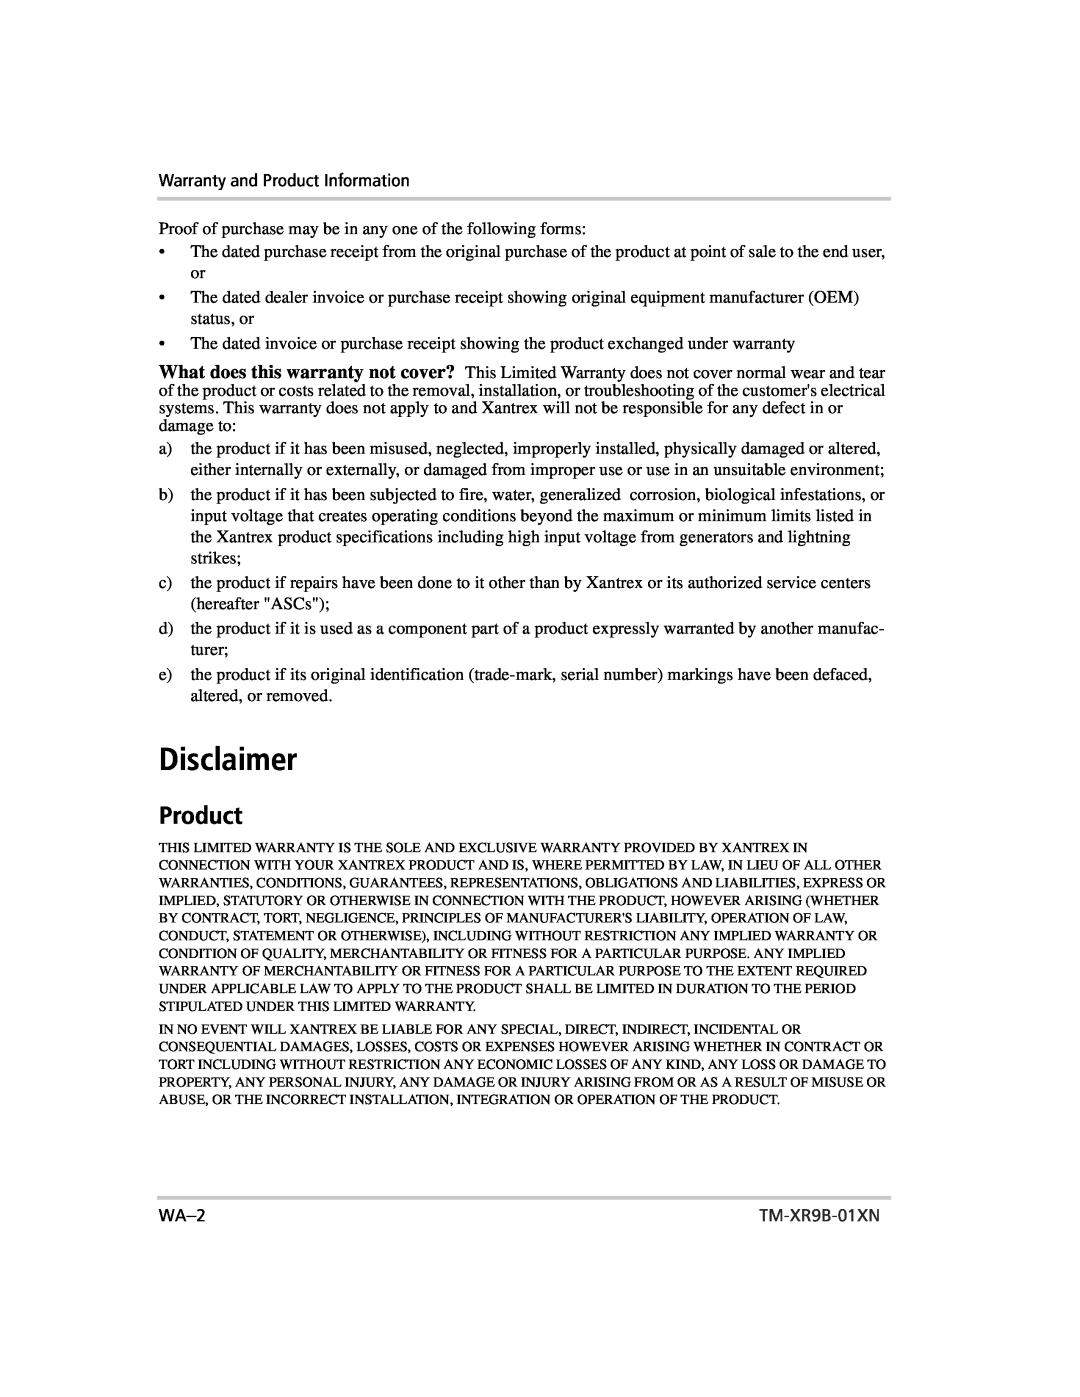 Xantrex Technology ENET-XFR3 manual Disclaimer, Product, TM-XR9B-01XN 